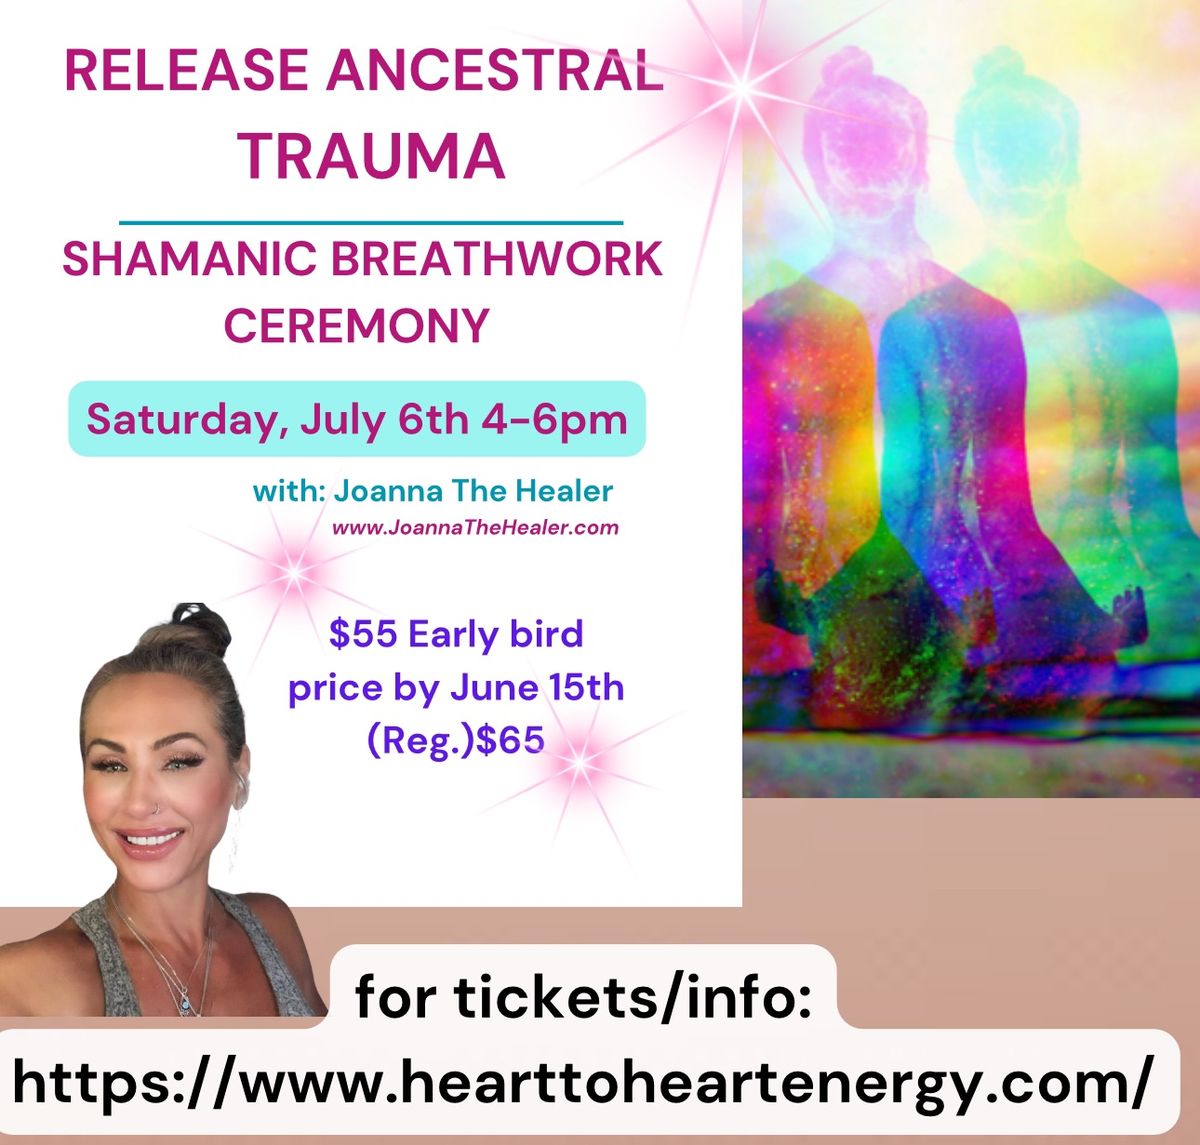 Release Ancestral Trauma with Shamanic Breathwork Ceremony!